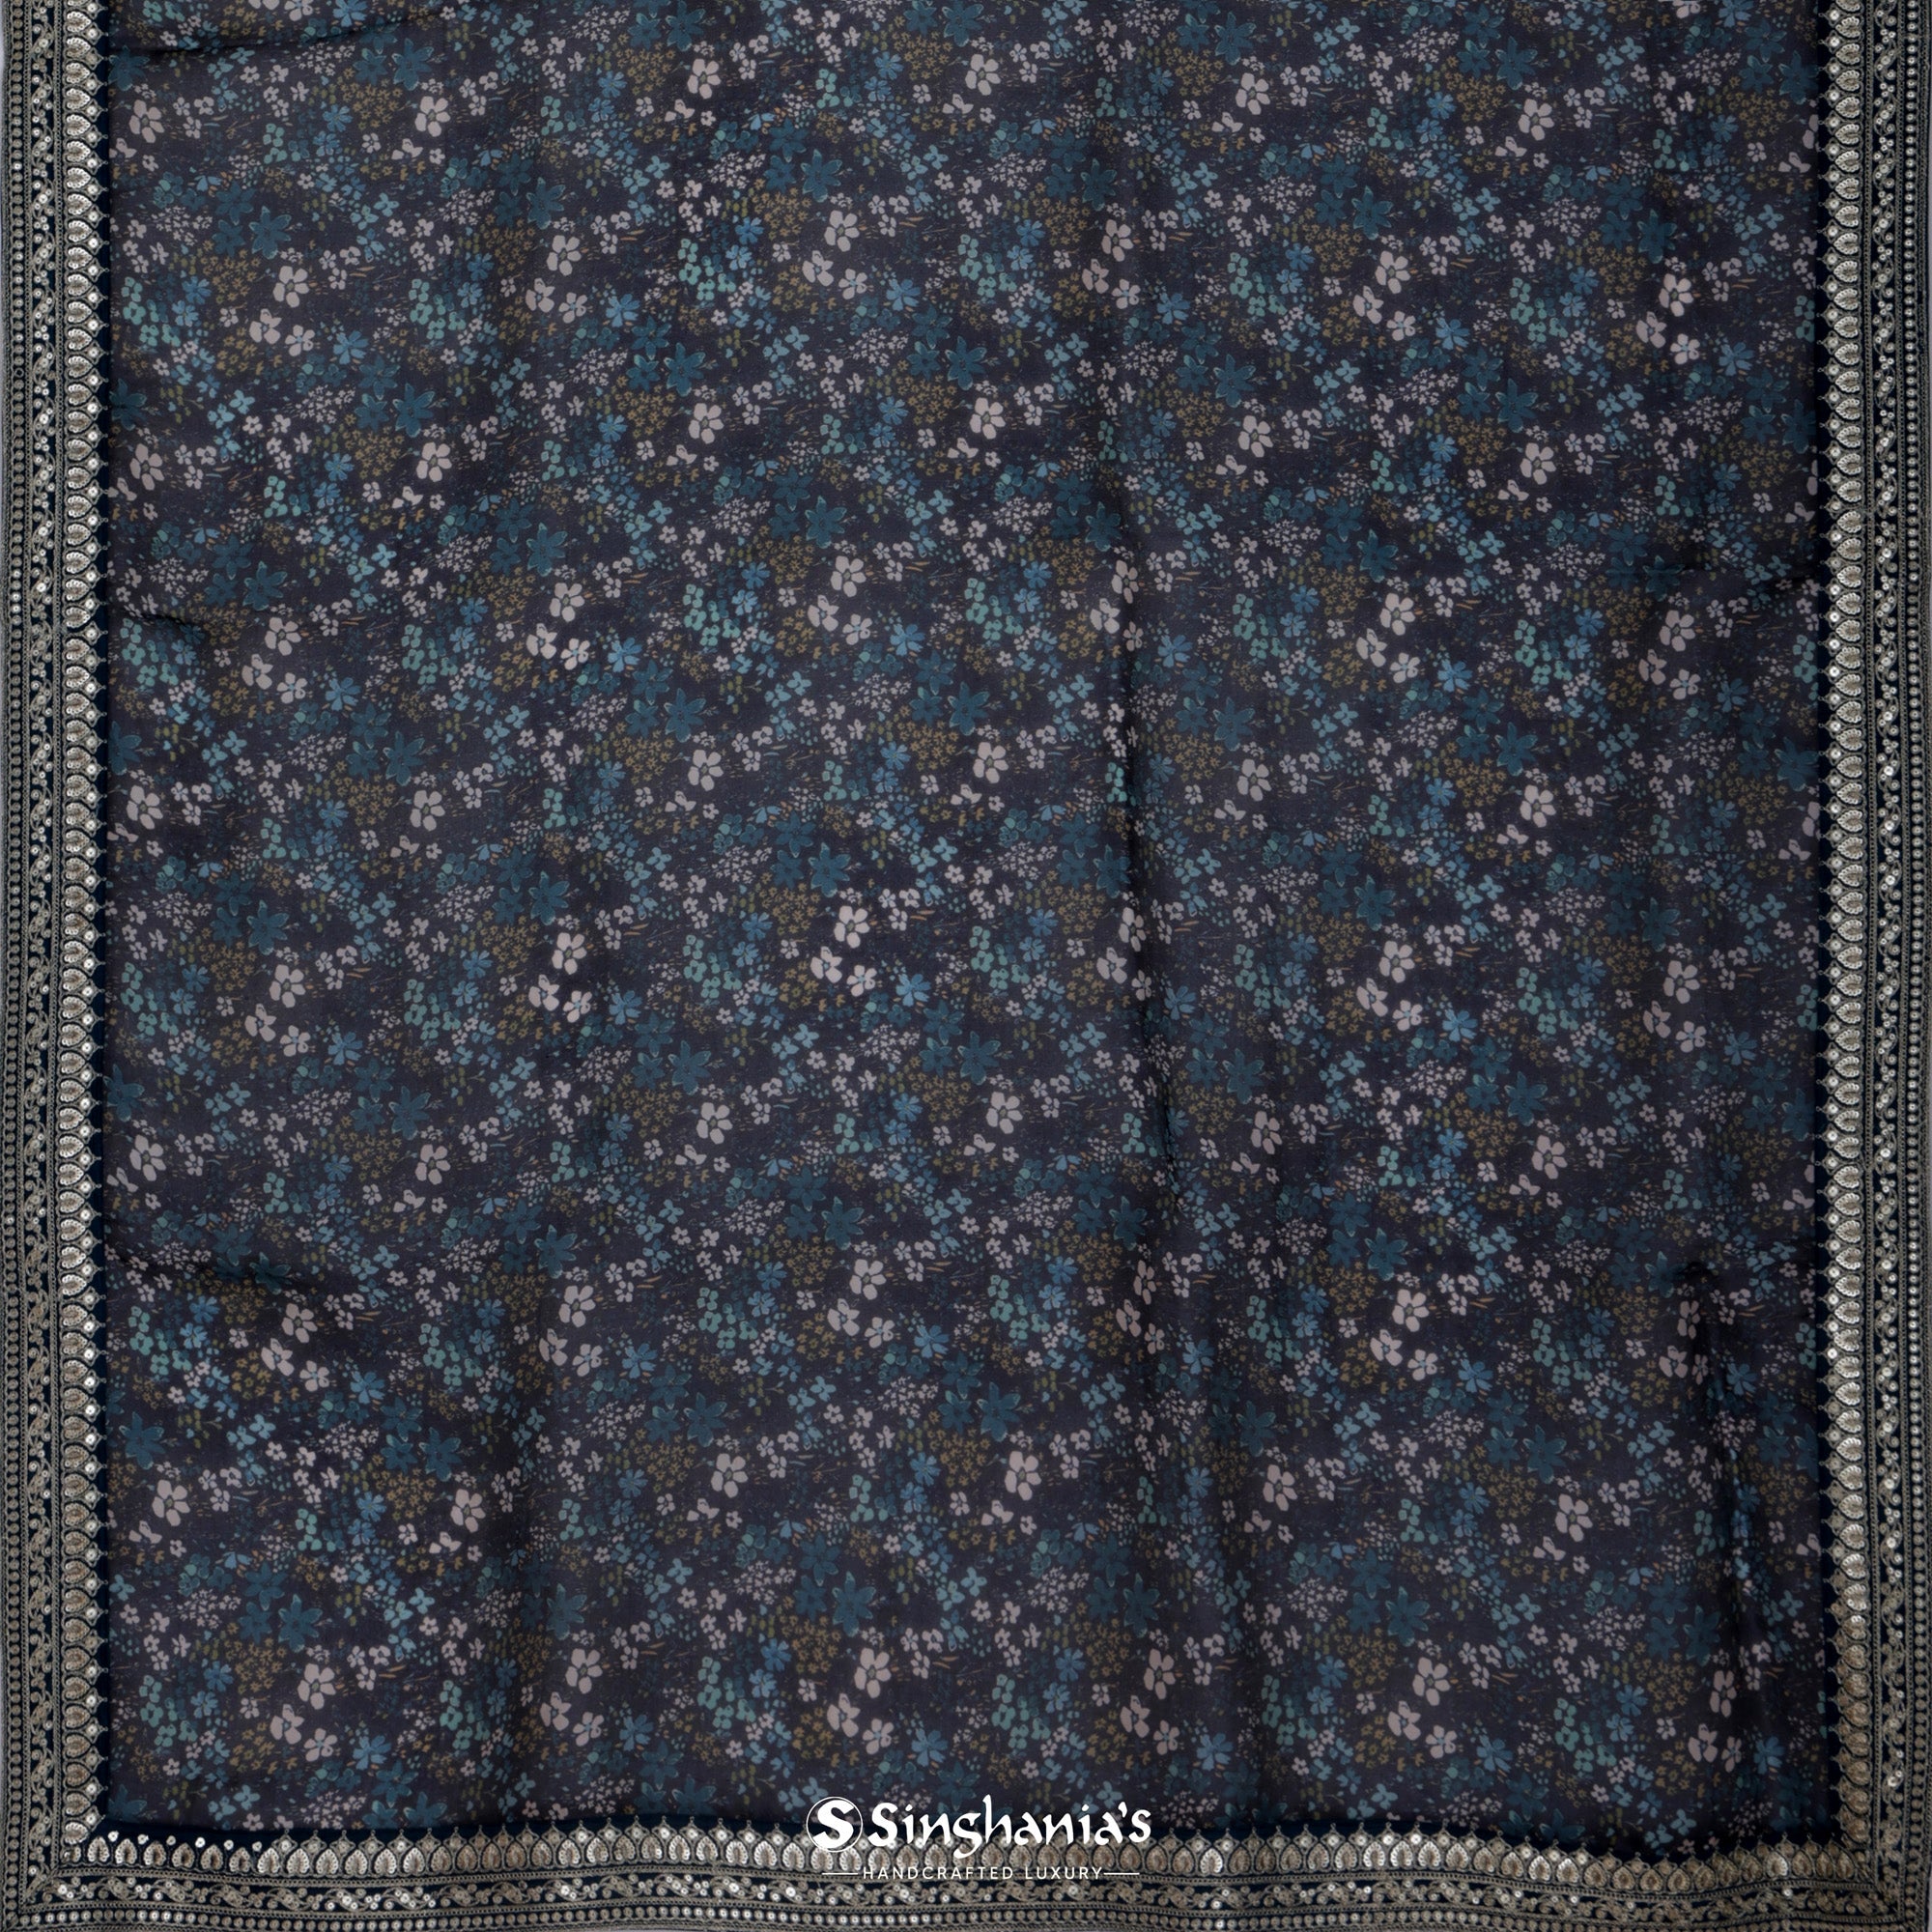 Dark Navy Blue Printed Organza Saree With Floral Print